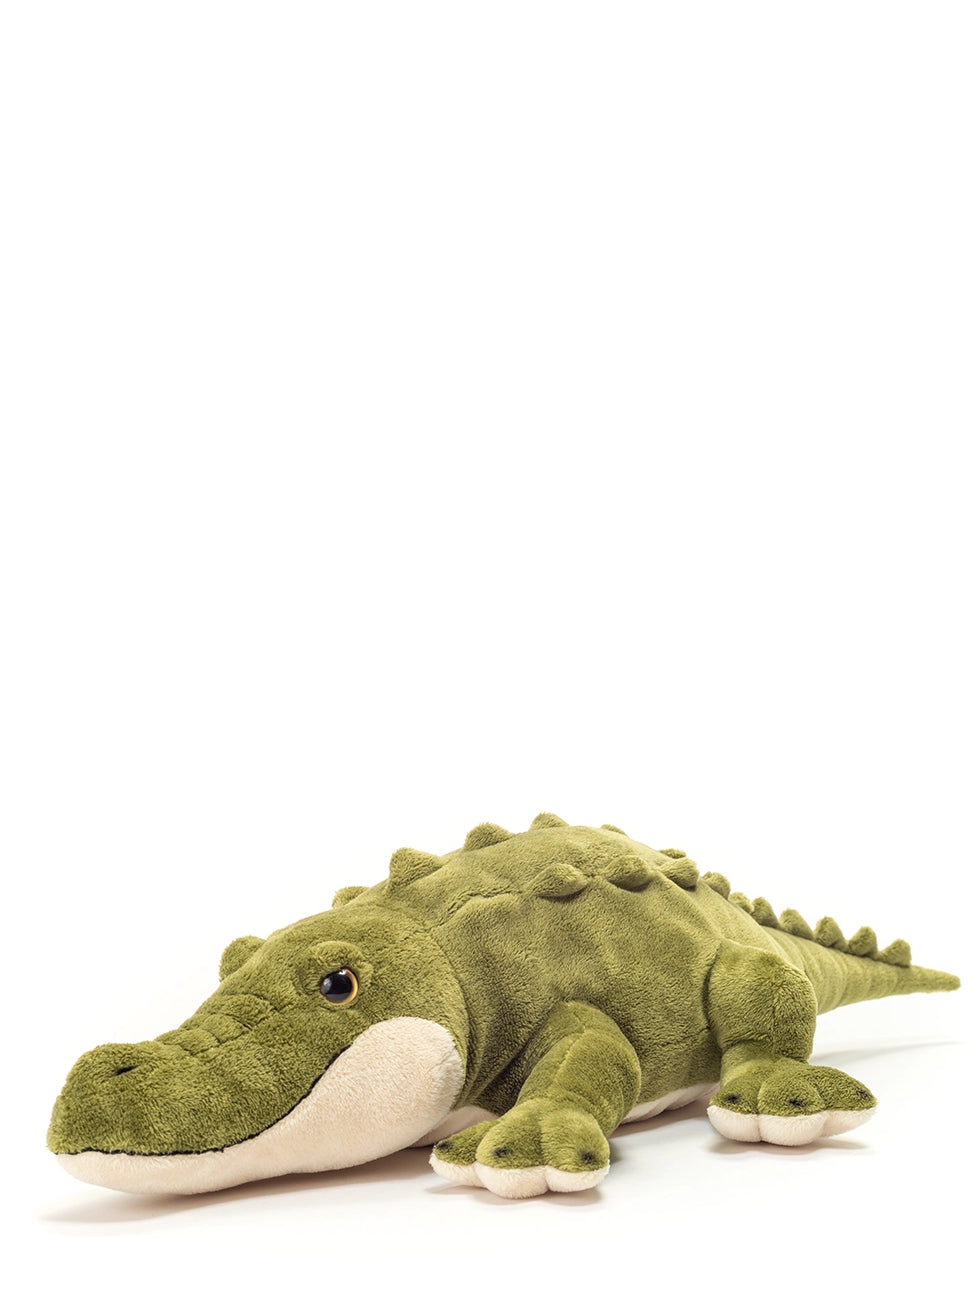 Crocodile (60 cm)